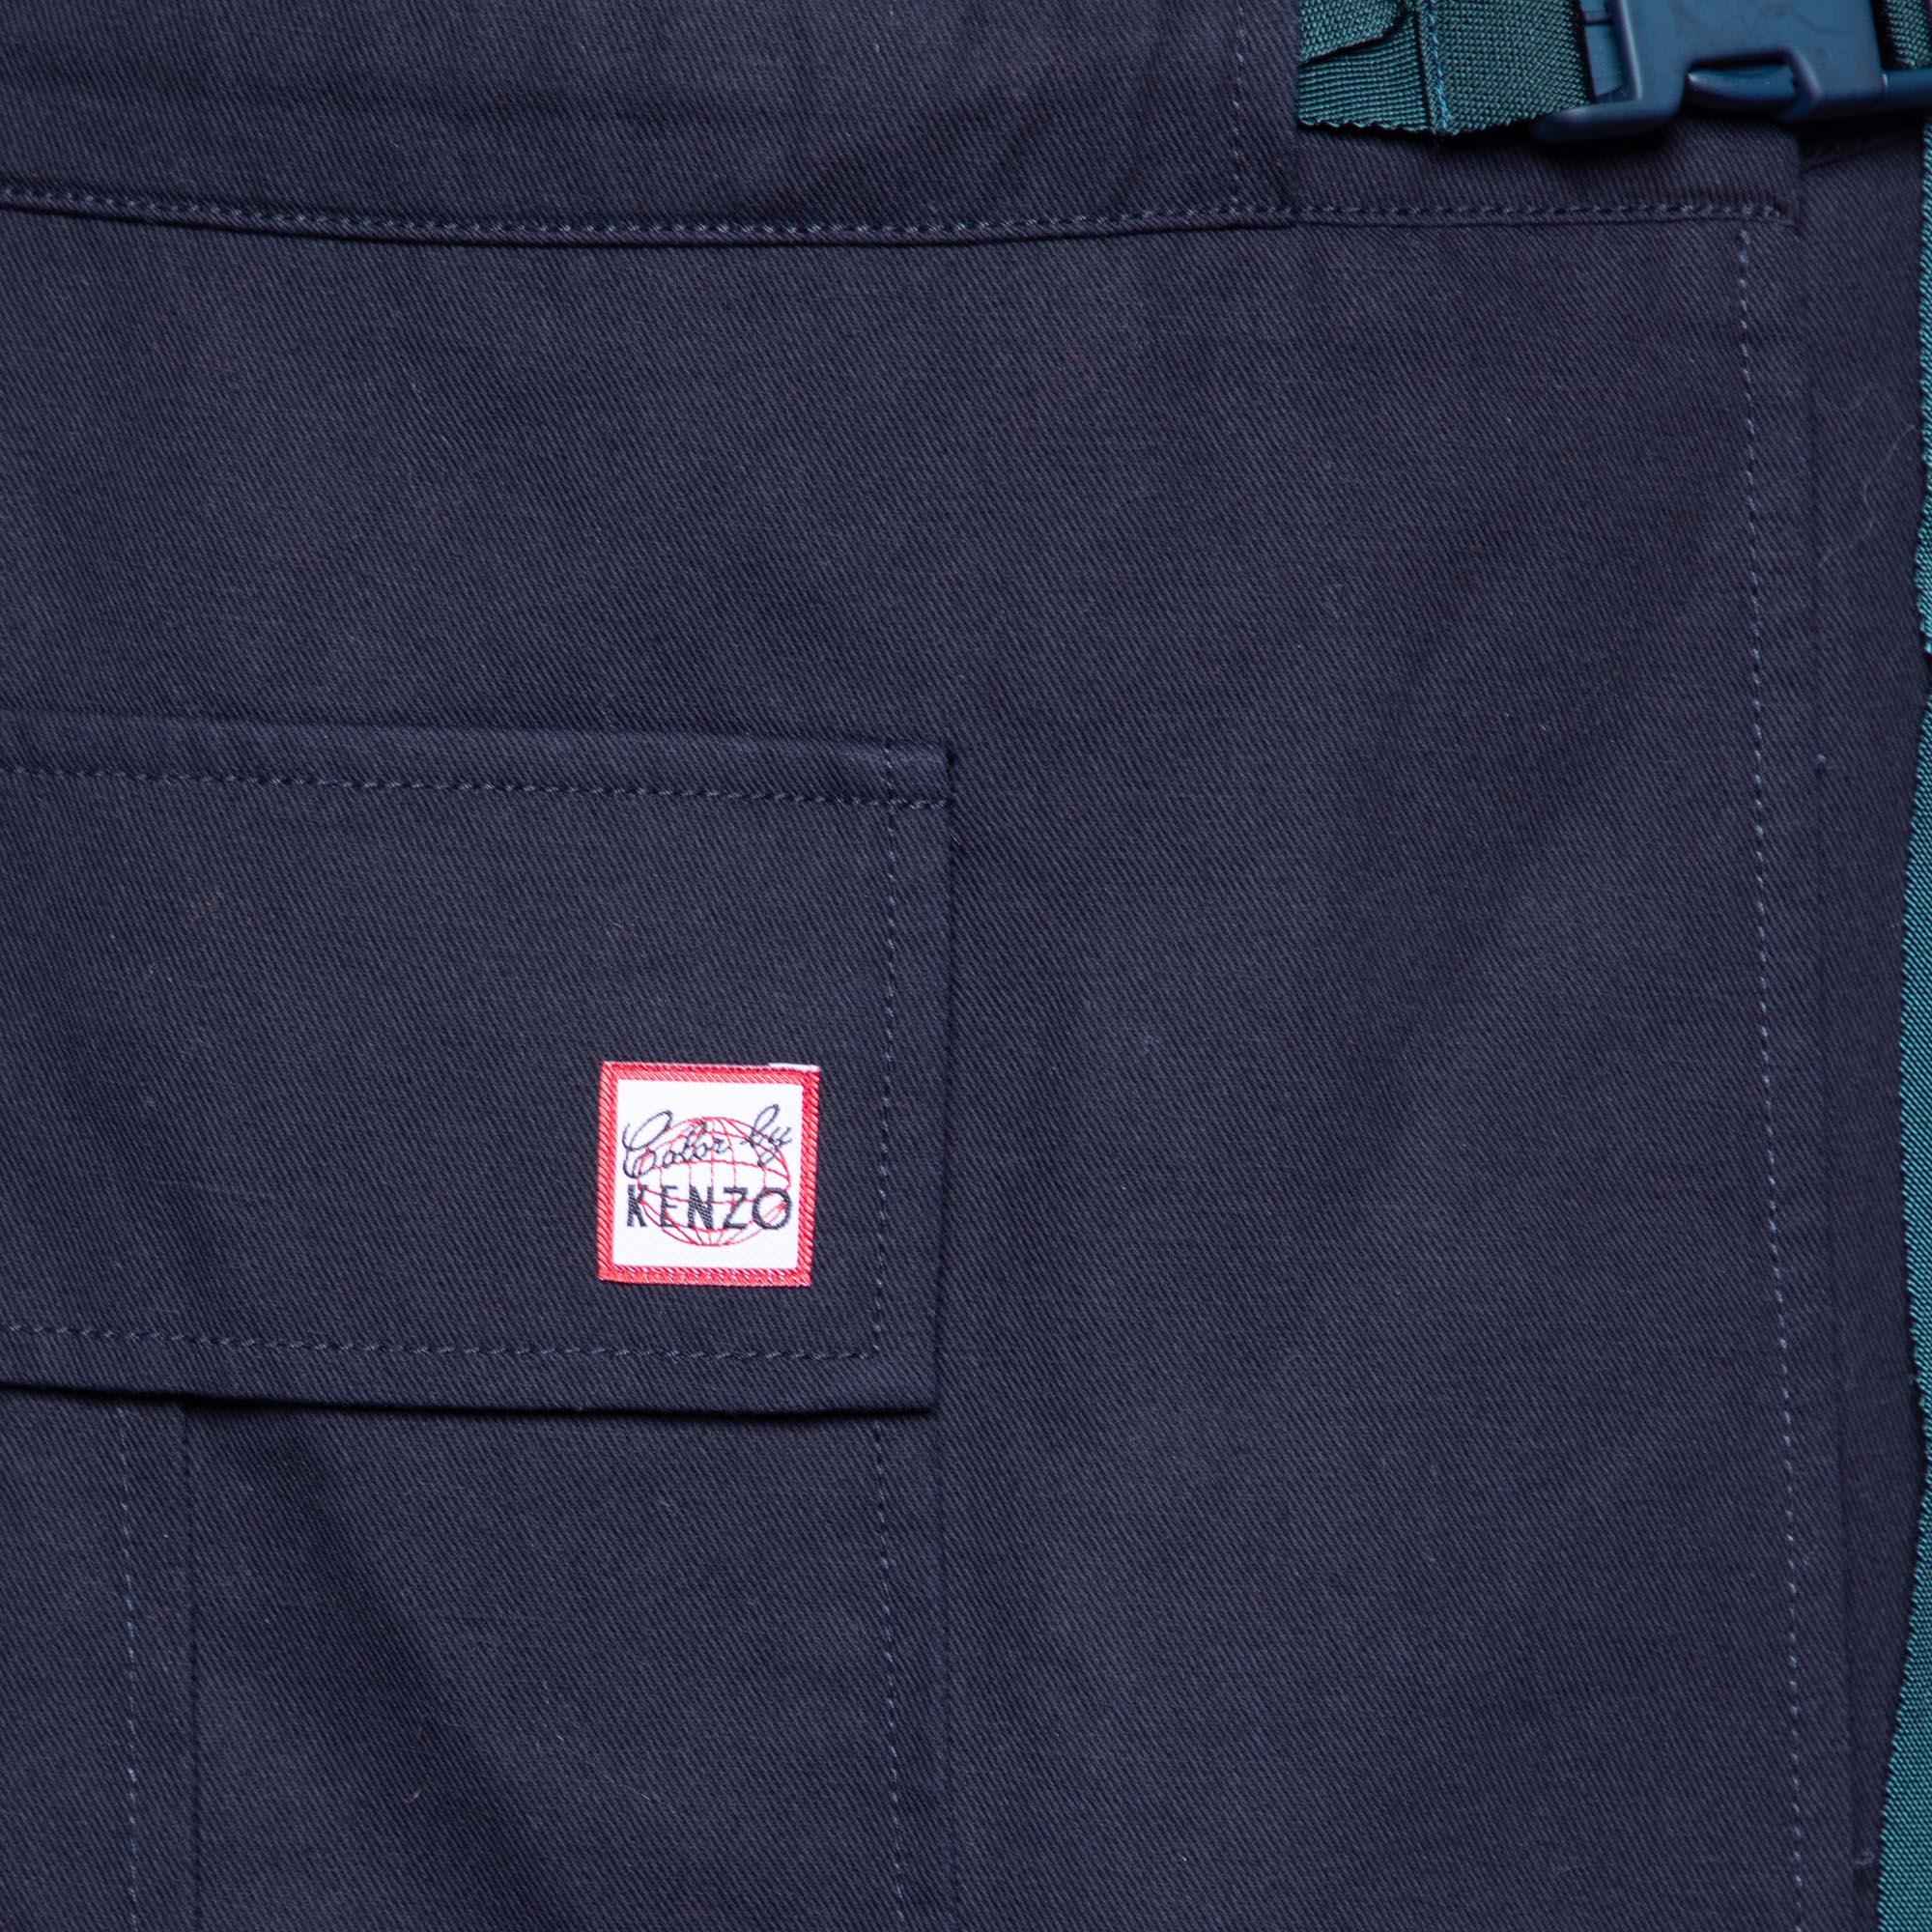 Kenzo Navy Blue Cotton Wrap Buckle Skirt S